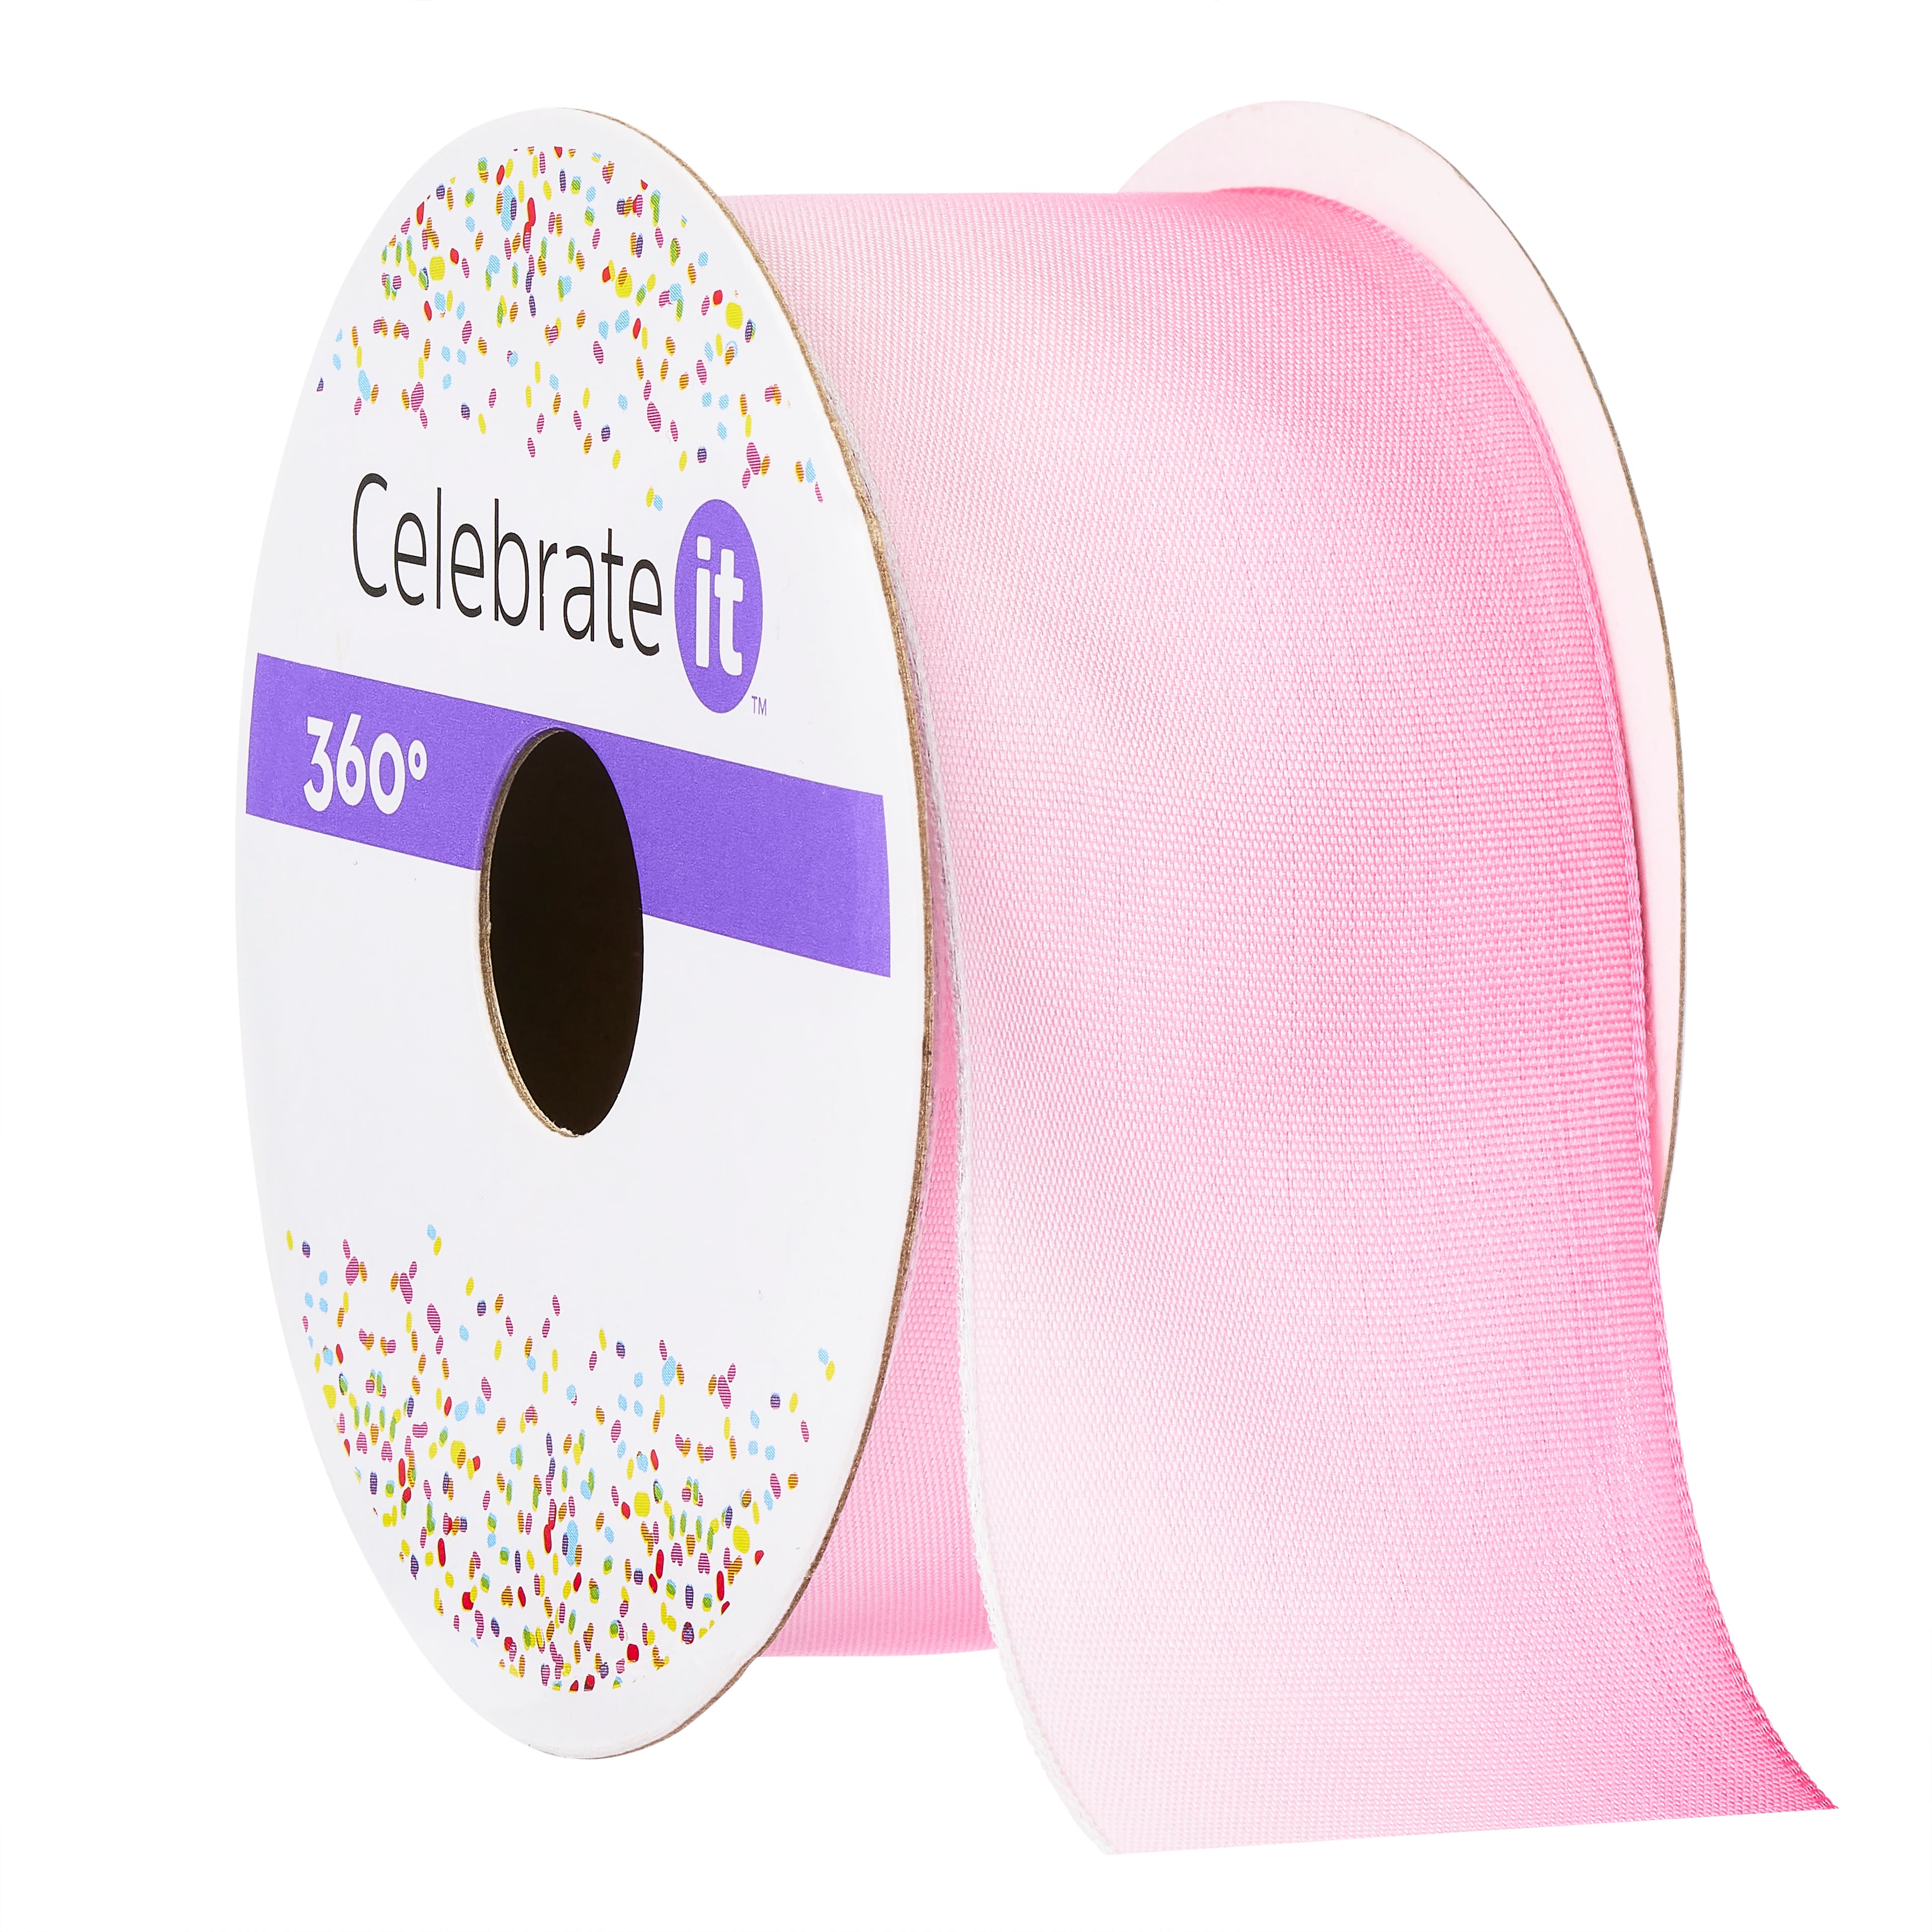 1.5 Light Pink Iridescent Glitter Ribbon